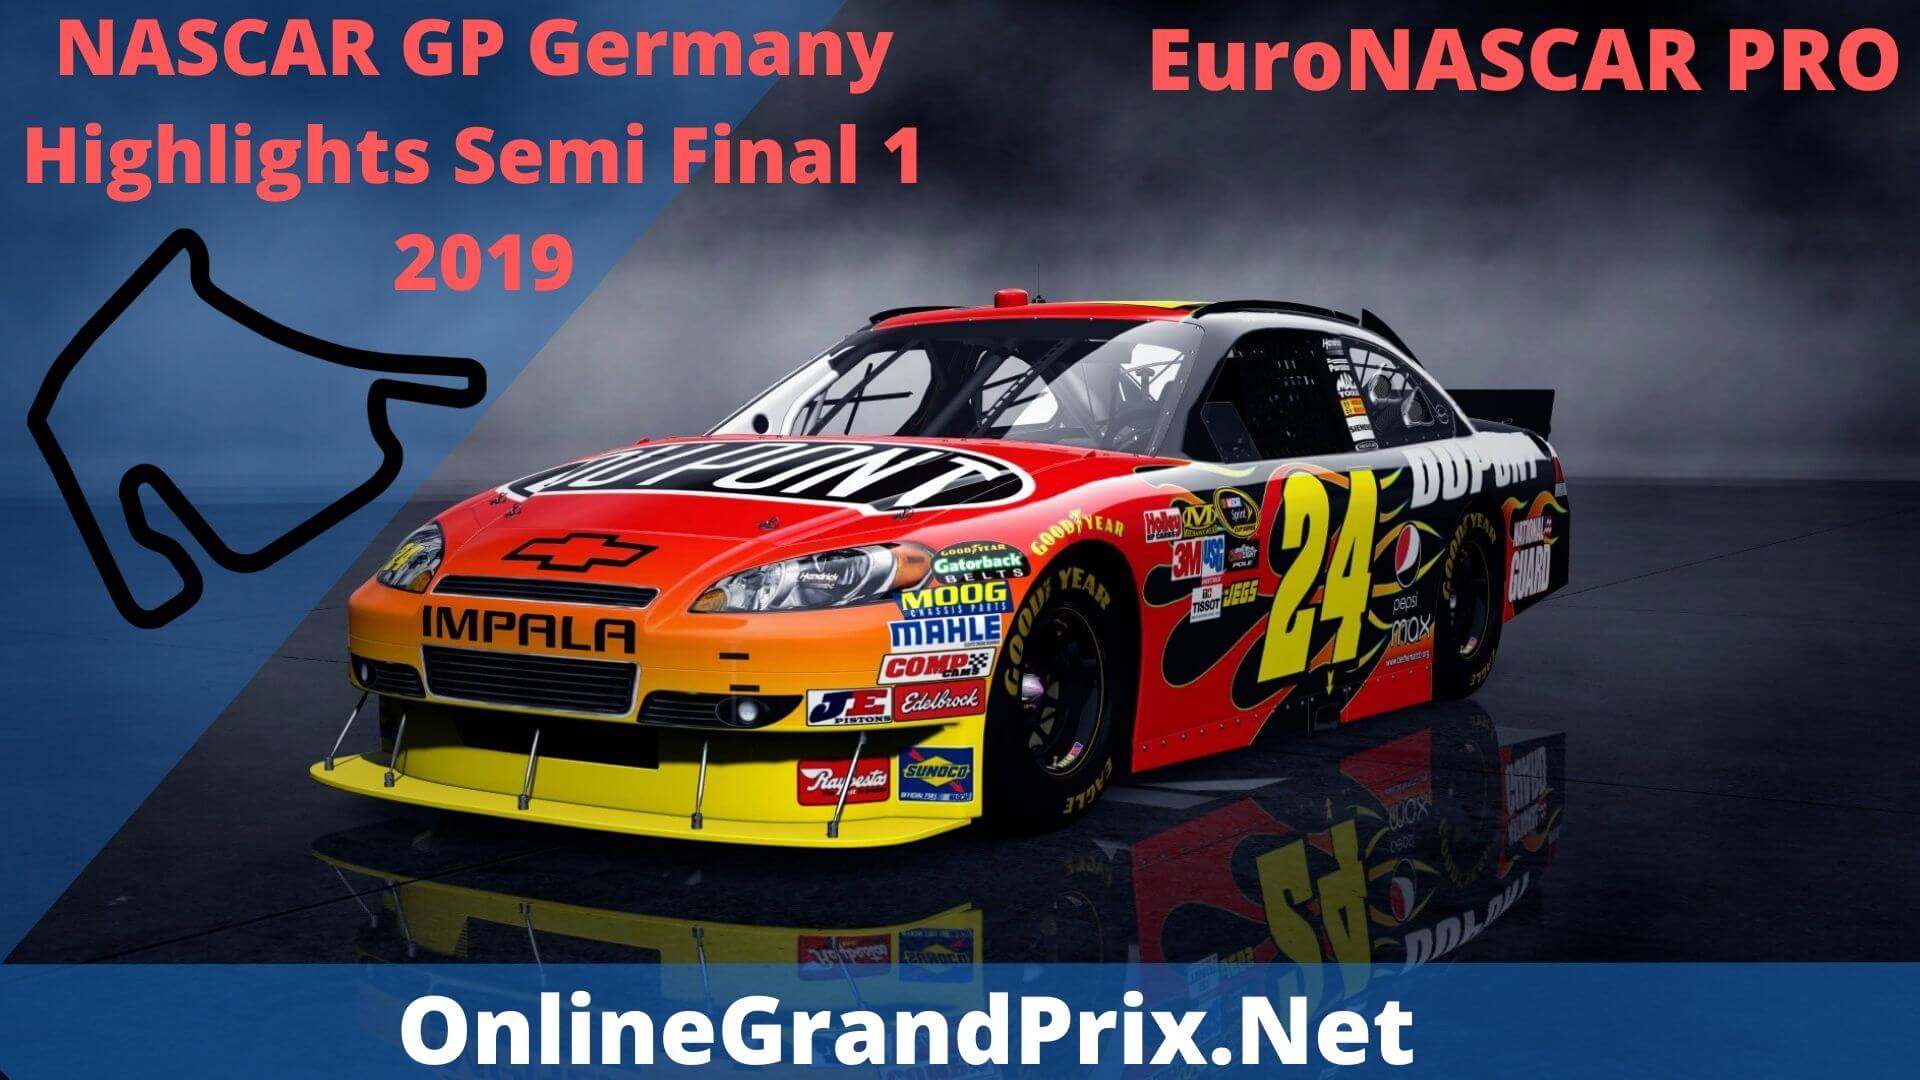 NASCAR GP Germany Semi Final 1 Highlights 2019